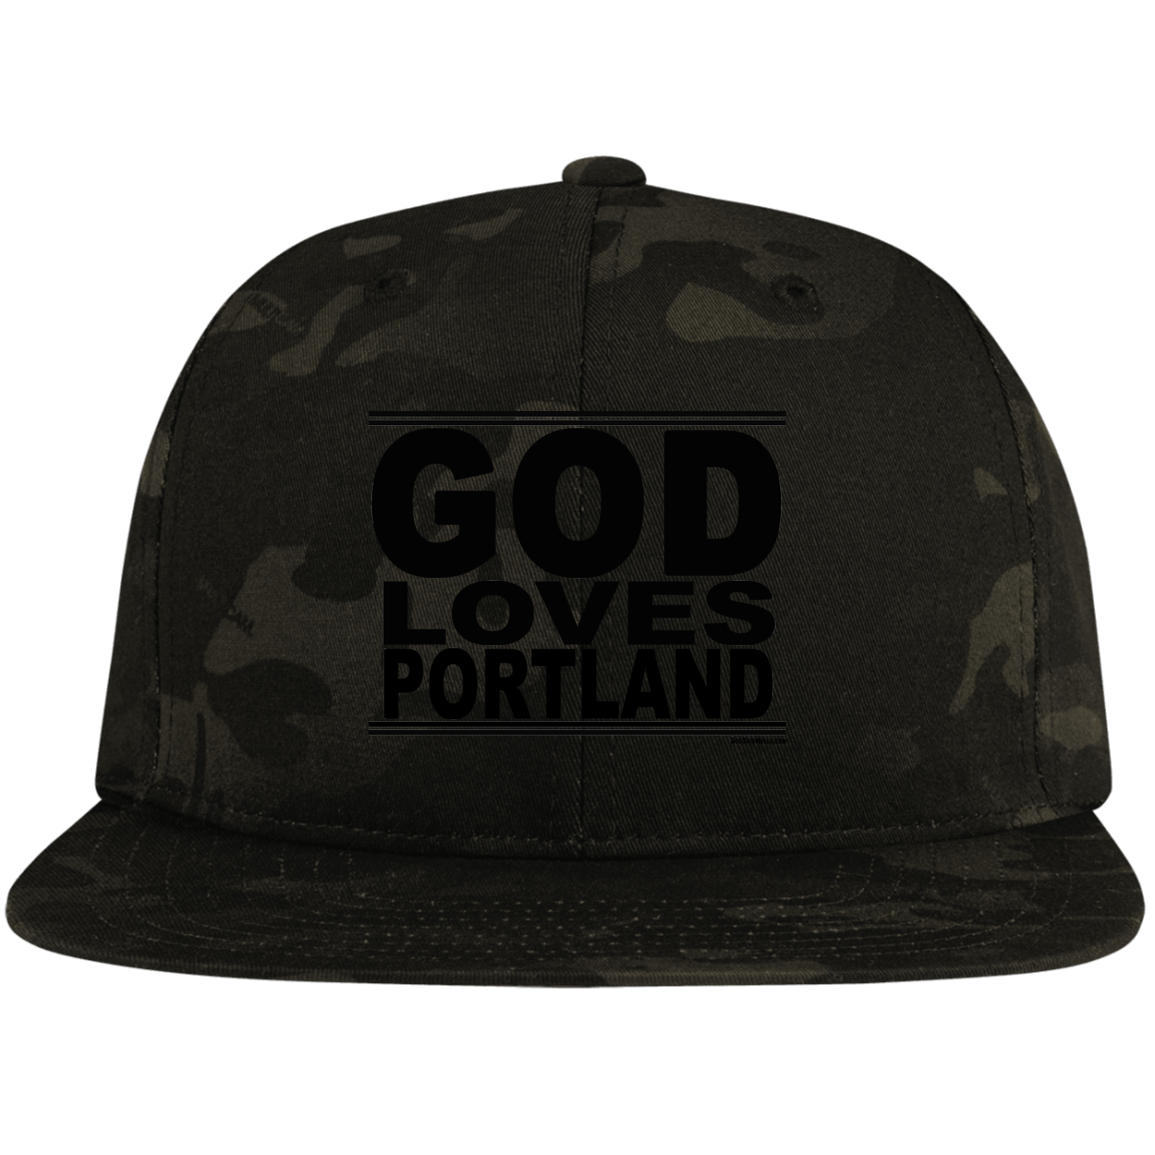 #GodLovesPortland - Snapback Hat